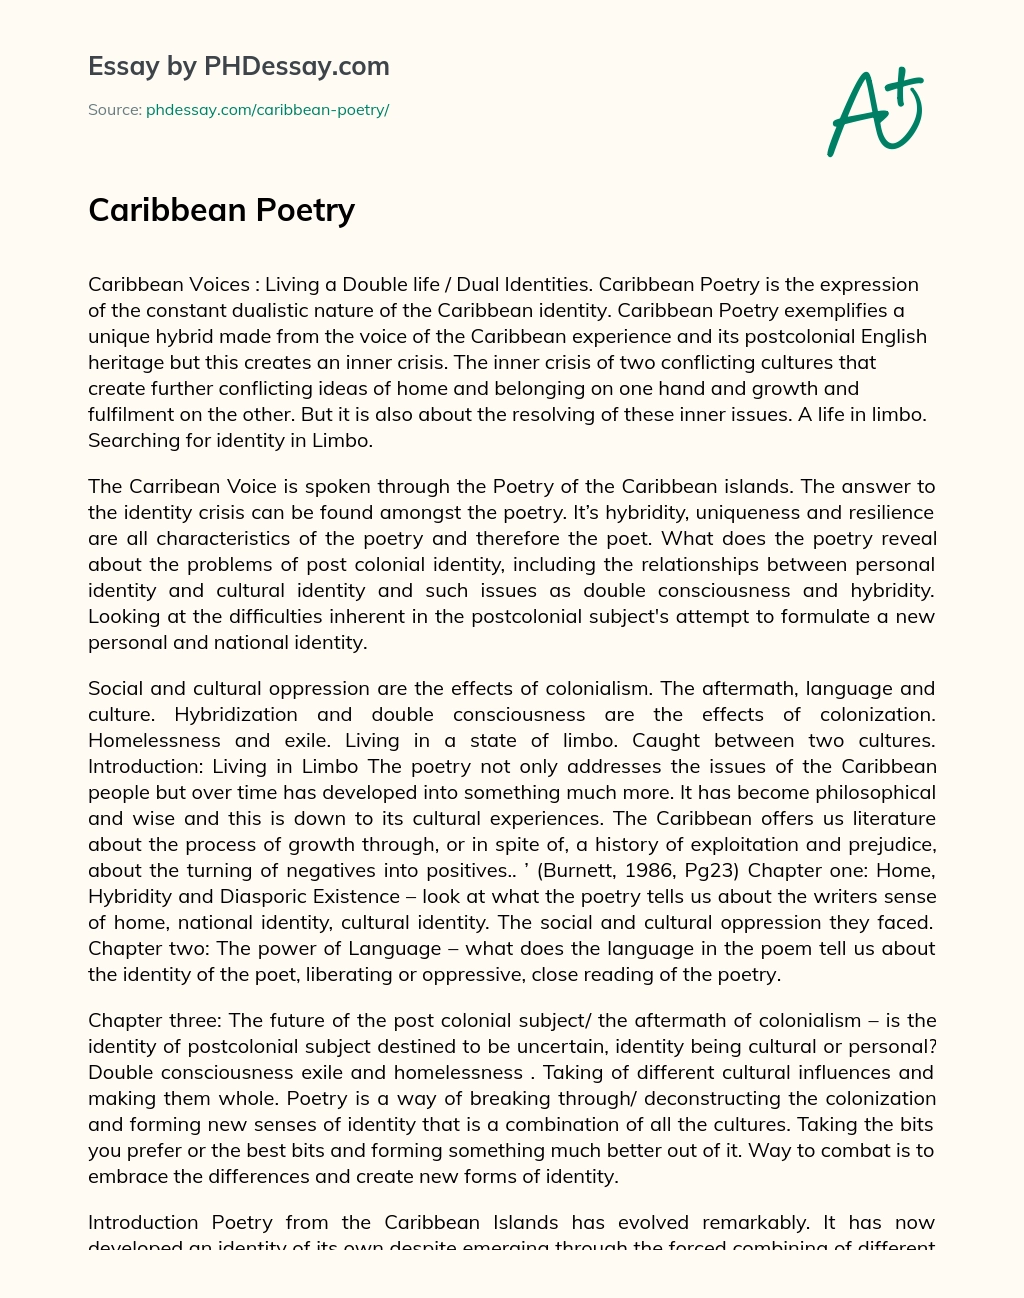 Caribbean Poetry essay